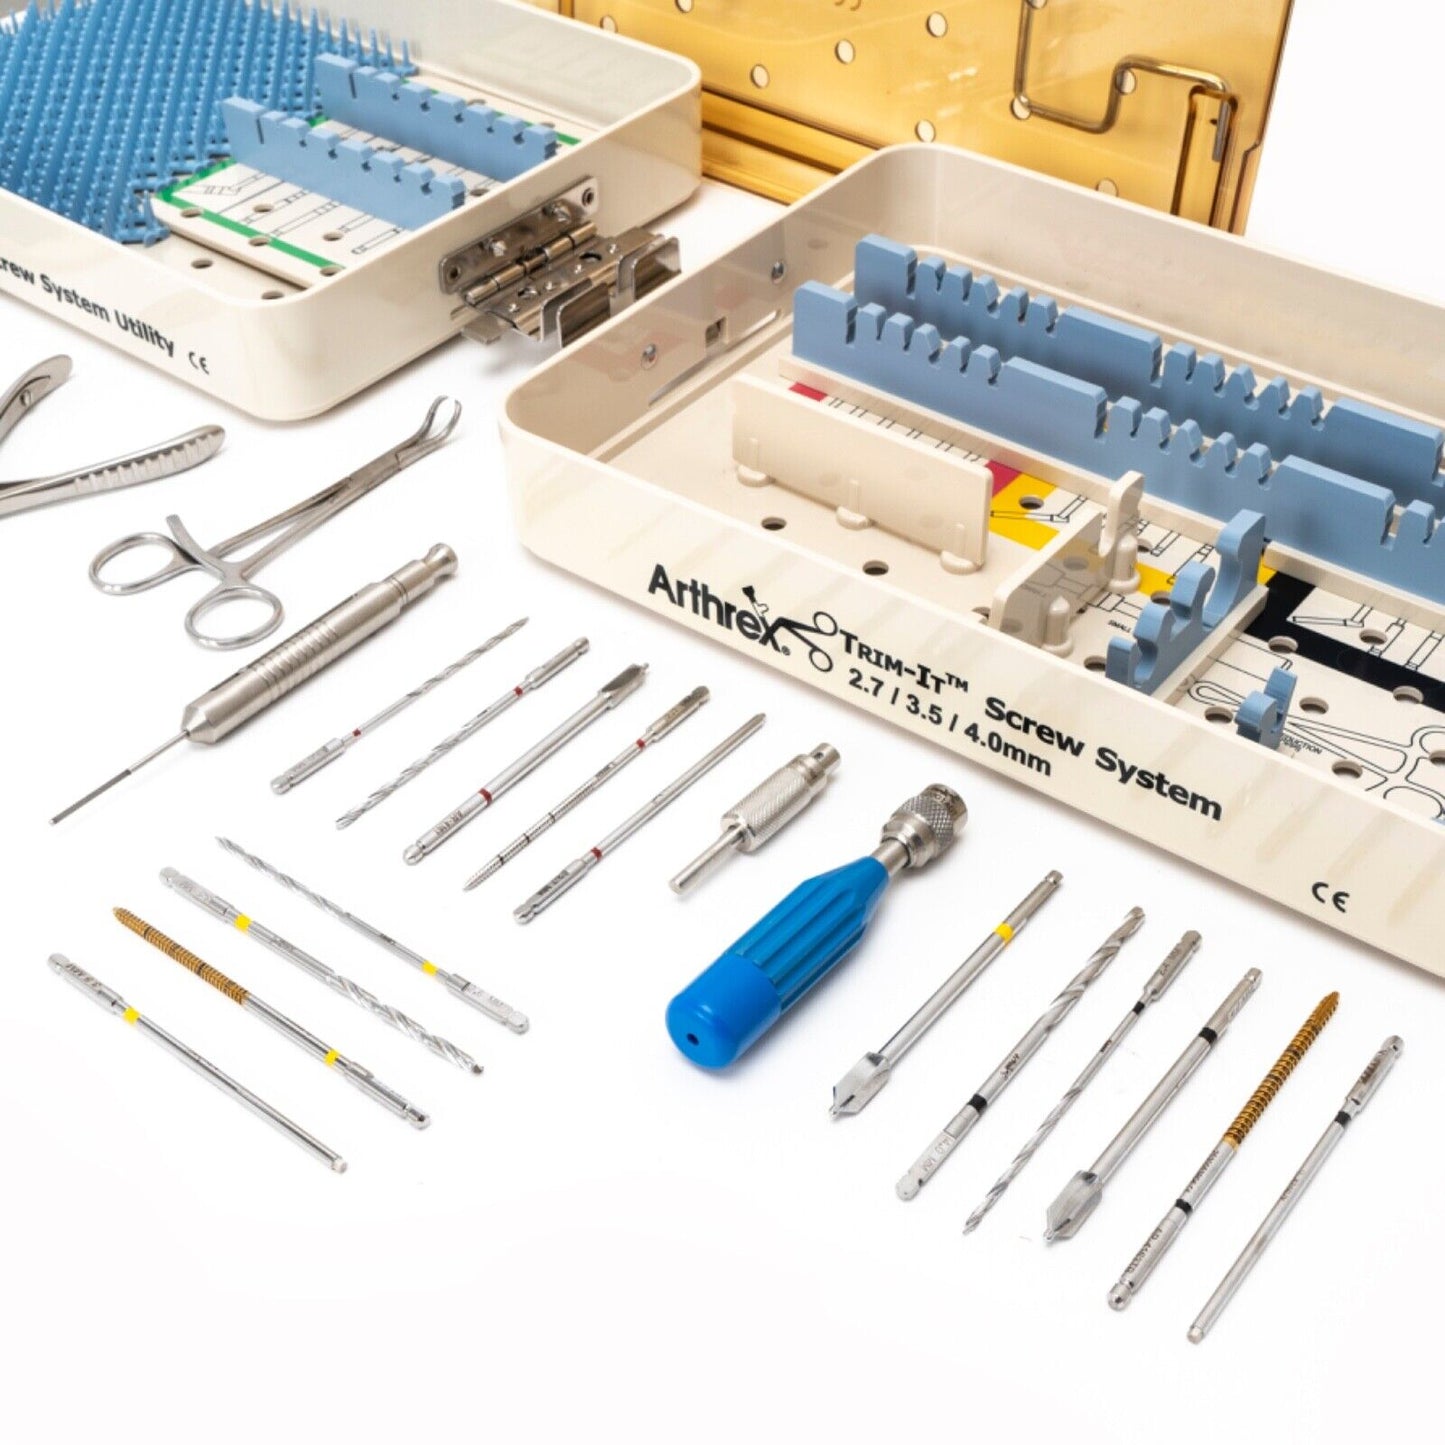 Arthrex Trim-It Surgical Screw System Instrumentation Set w/ Case Orthopedic